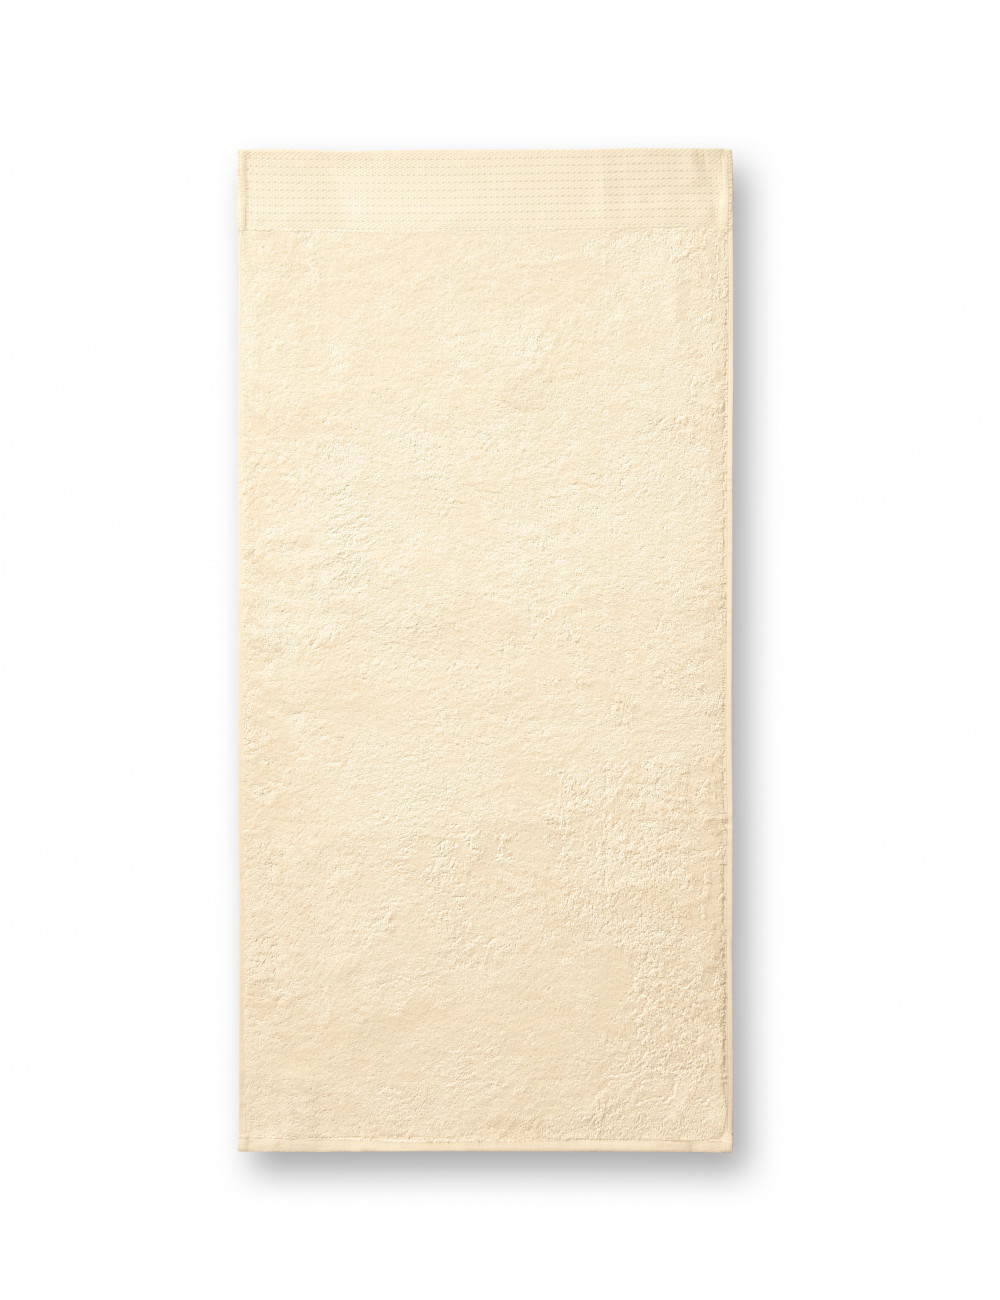 Unisex towel bamboo towel 951 almond Adler Malfinipremium